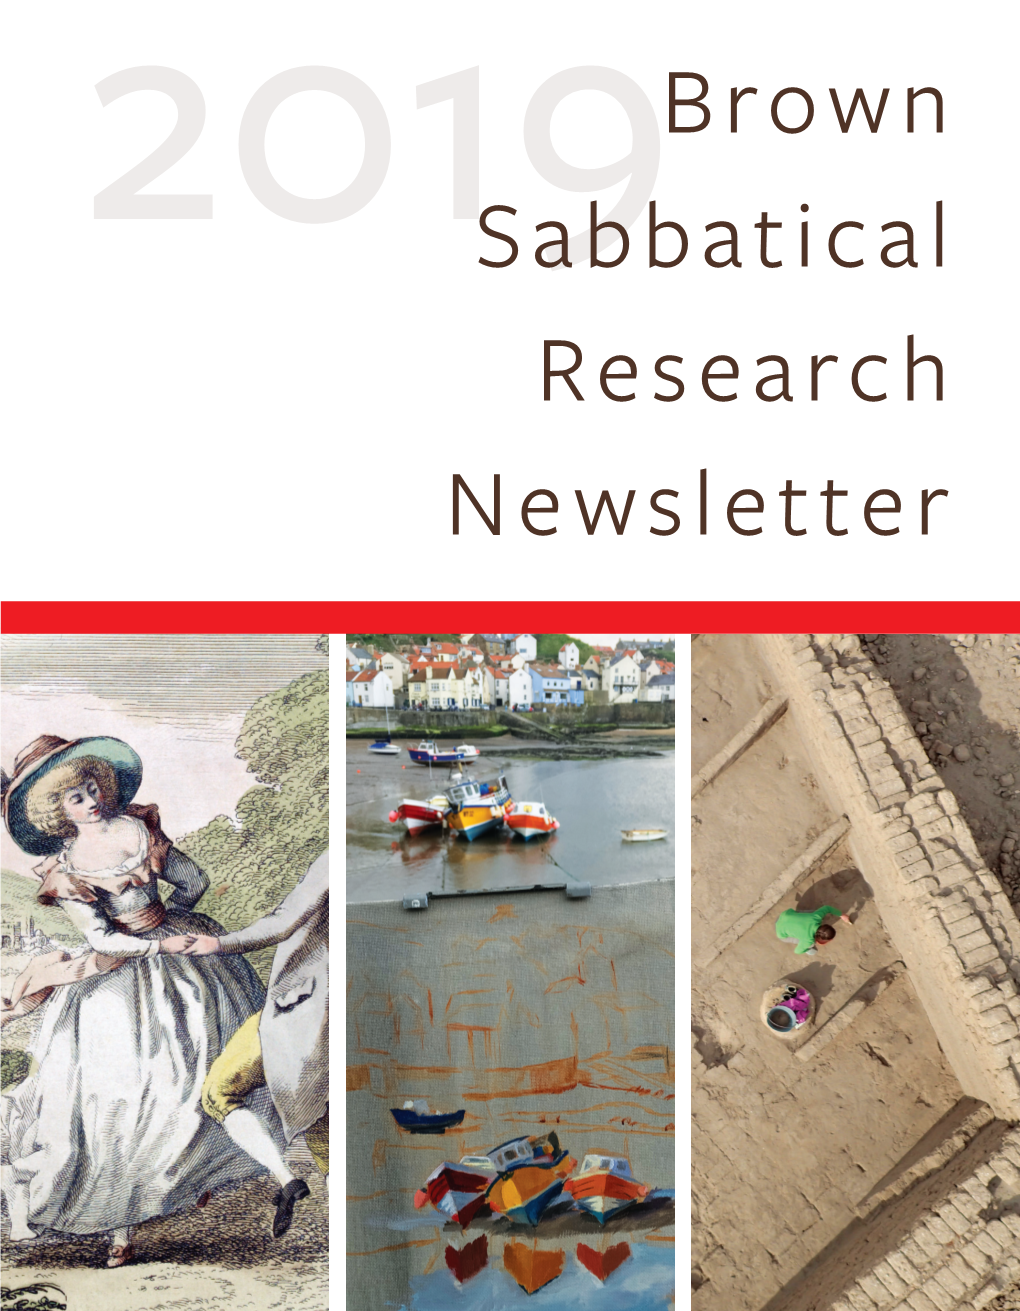 Brown Sabbatical Research Newsletter